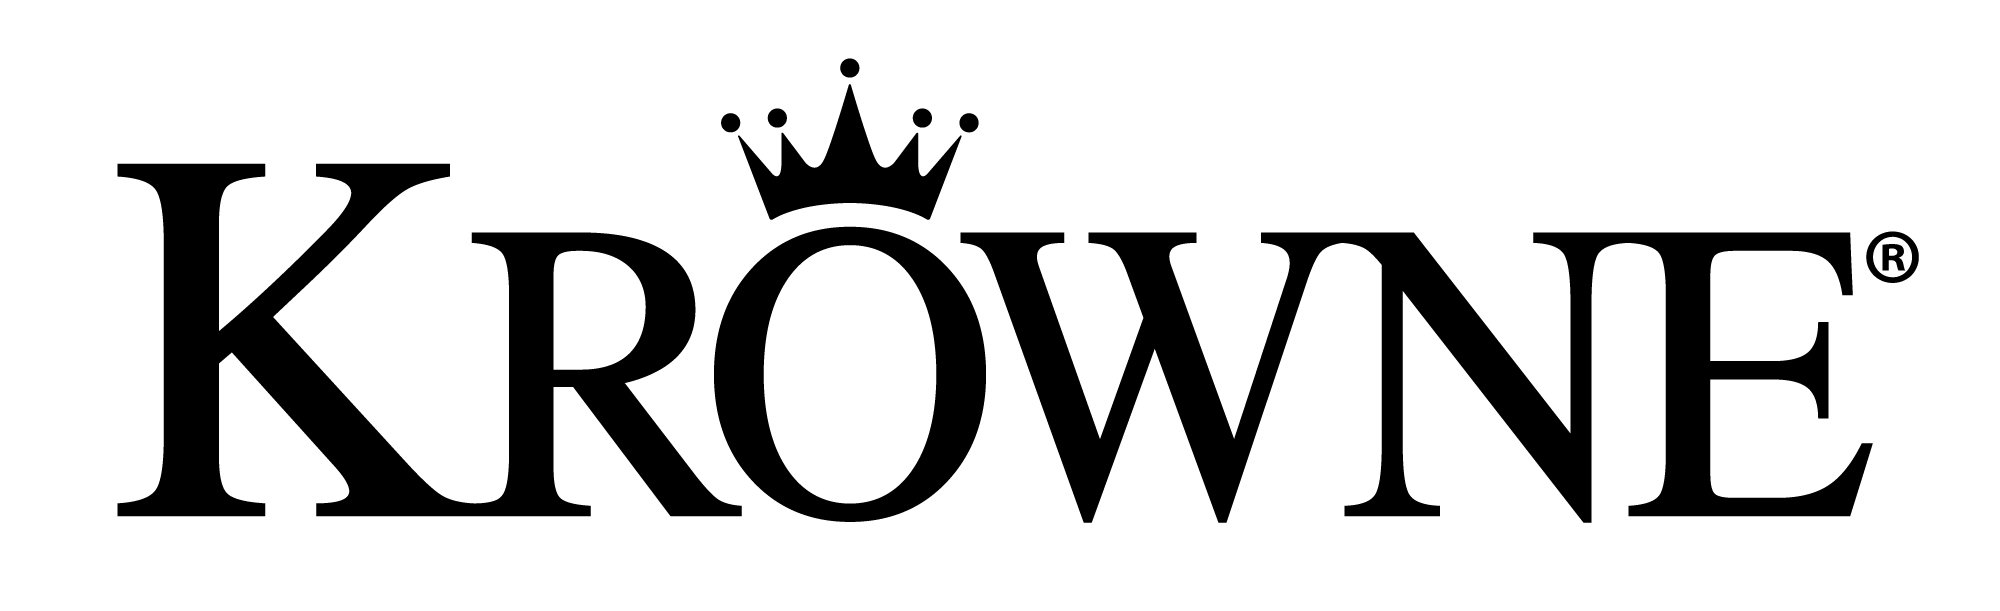 Krowne-Logo.jpg